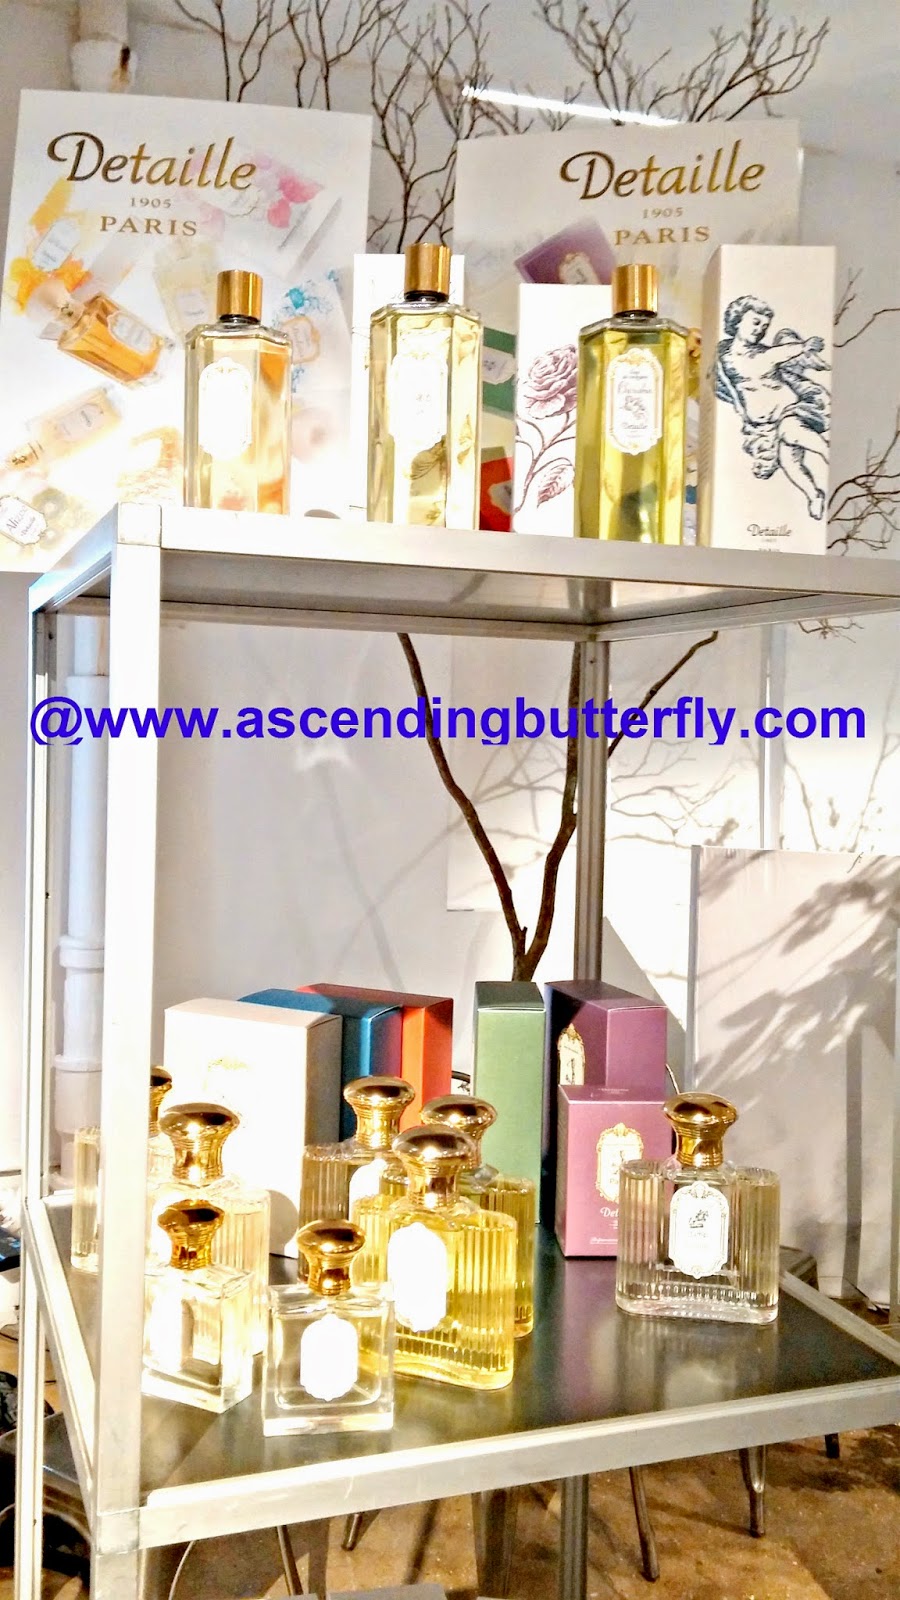 Detaille 1905 Paris offers Skin Care, Perfumes, Essentials Oils, Powders, Room Fragrances